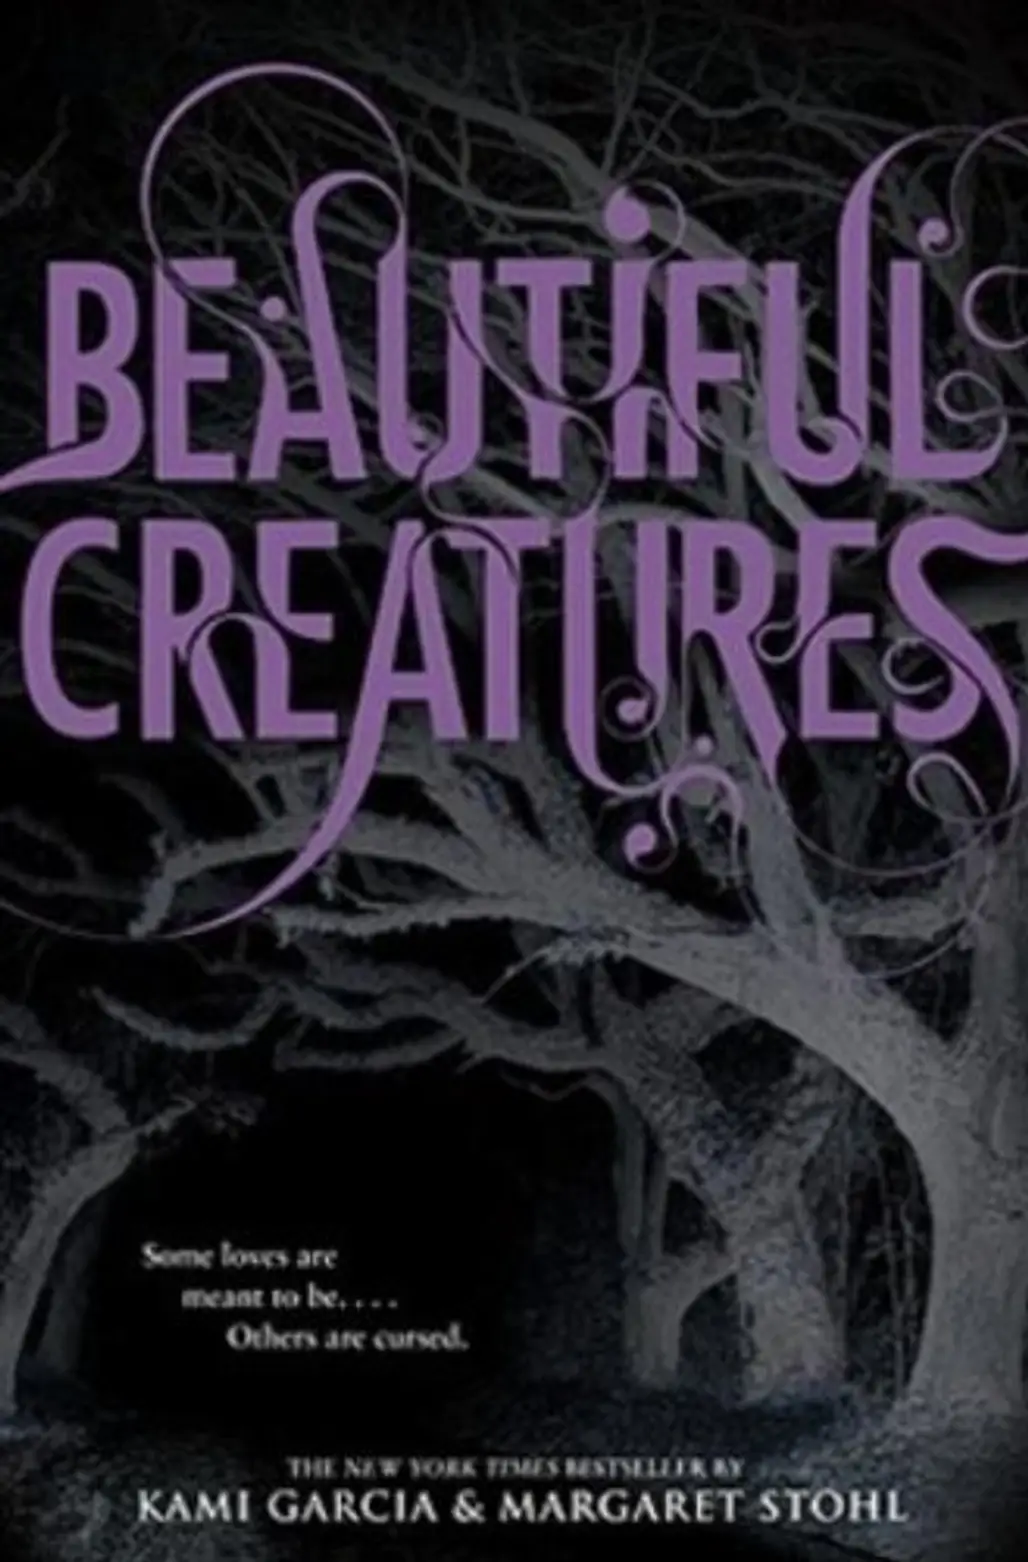 Beautiful Creatures (Kami Garcia & Margaret Stohl)